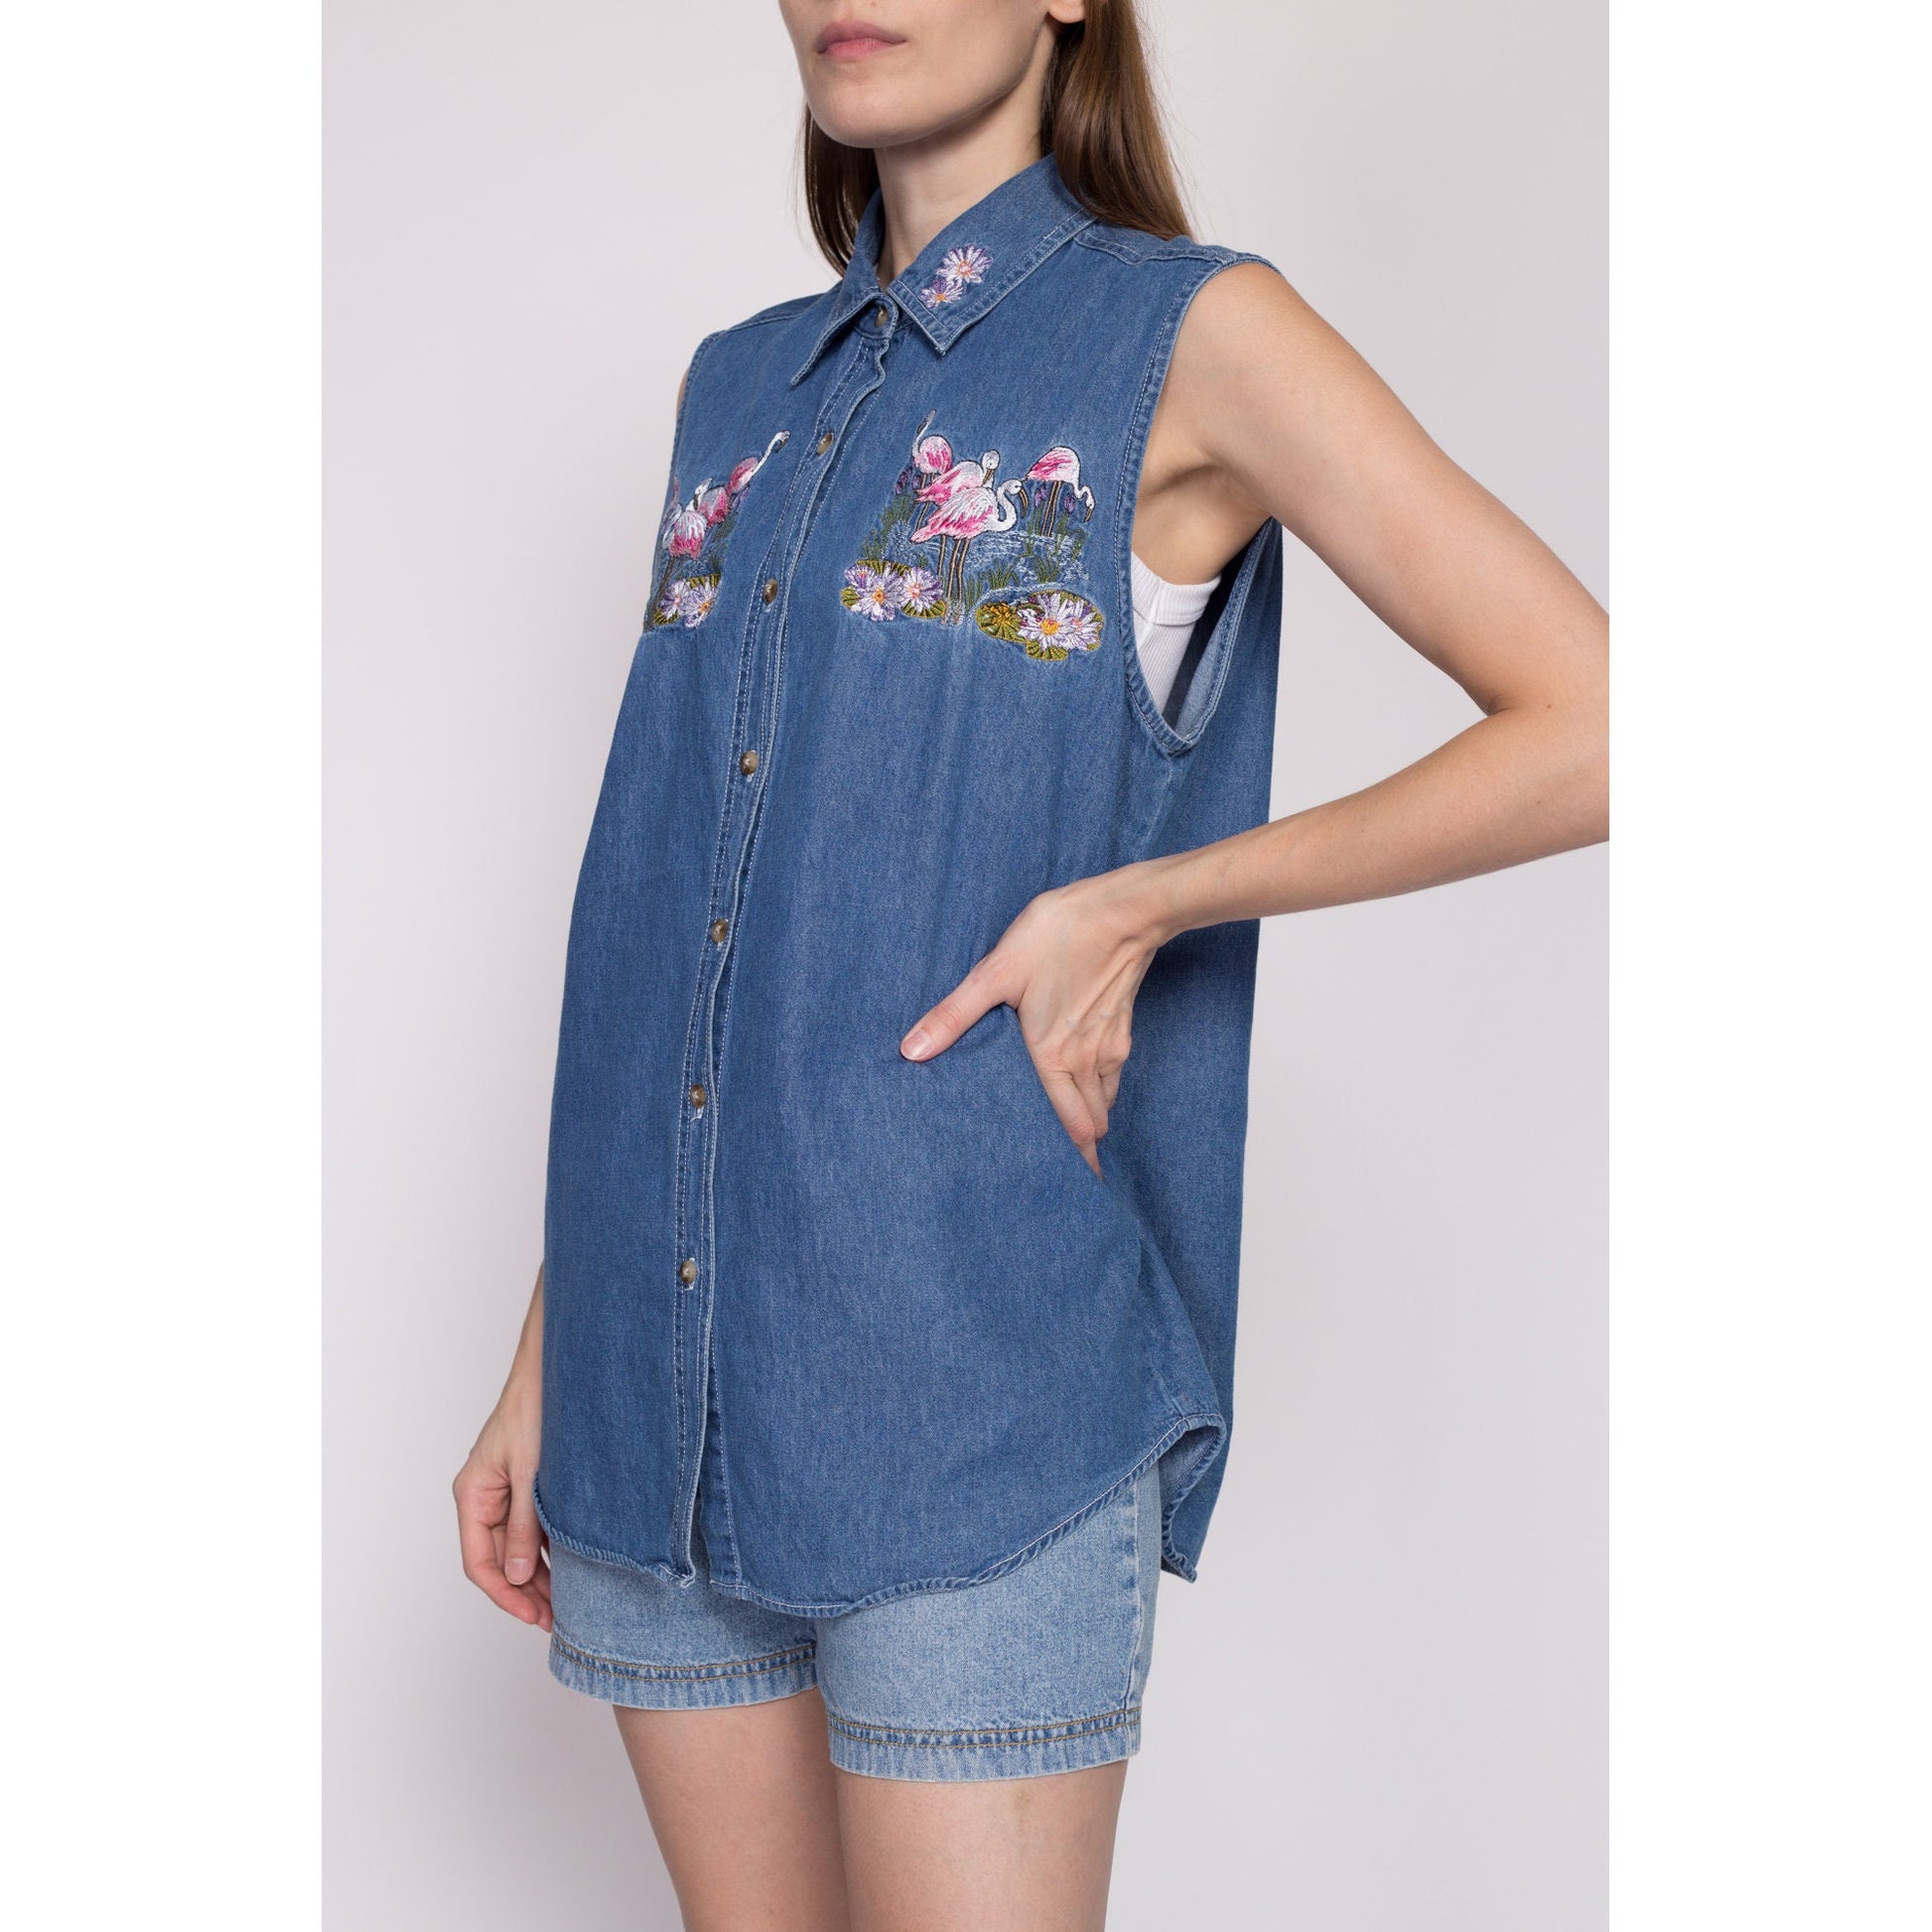 L| 90s Flamingo Chambray Sleeveless Shirt - Large | Vintage Embroidered Denim Vest